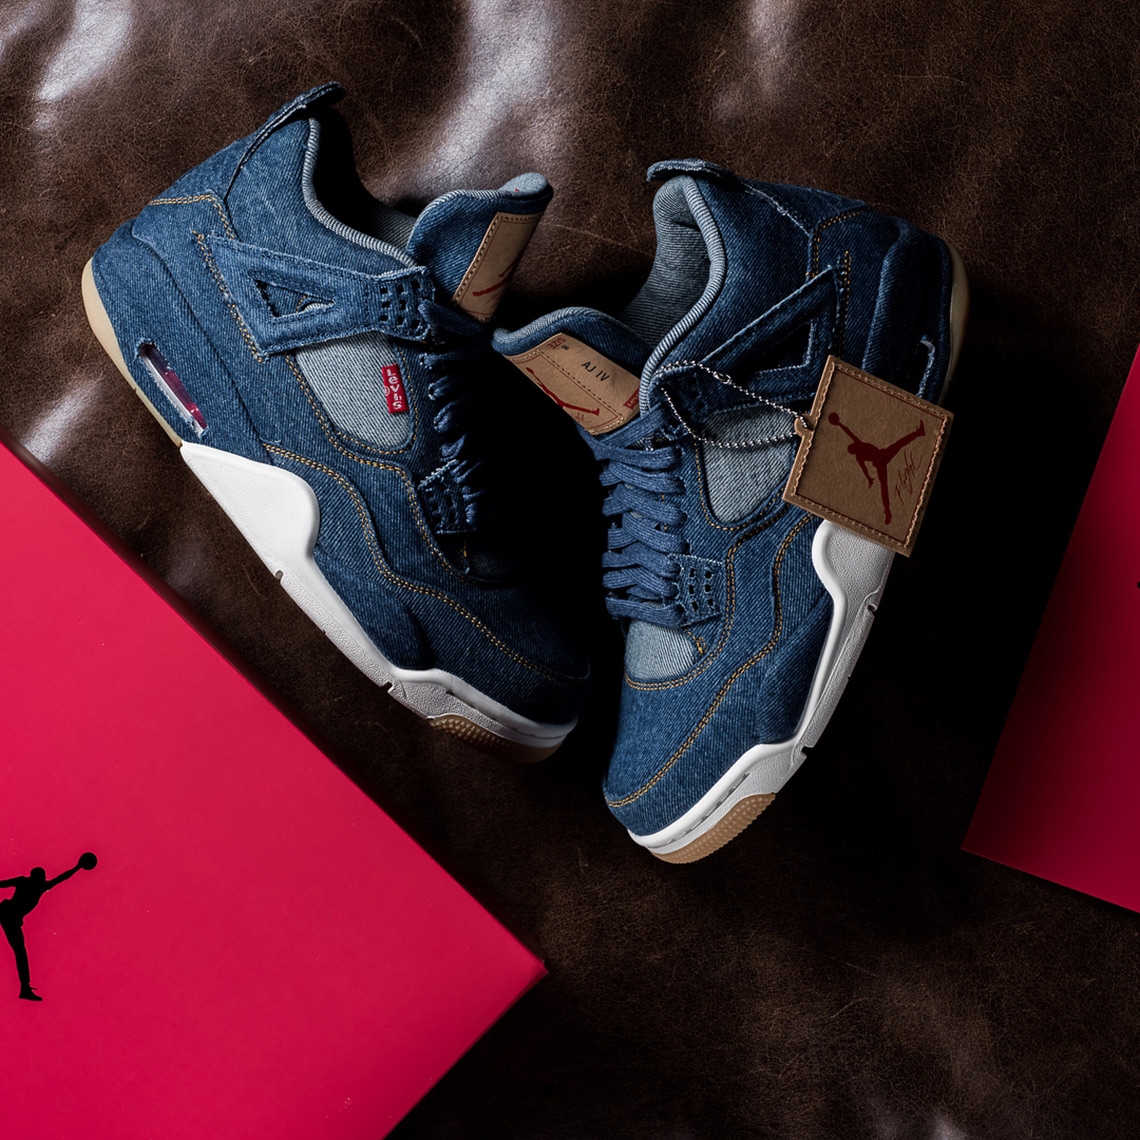 The Levi's x Air Jordan 4 Release Details - SneakerNews.com